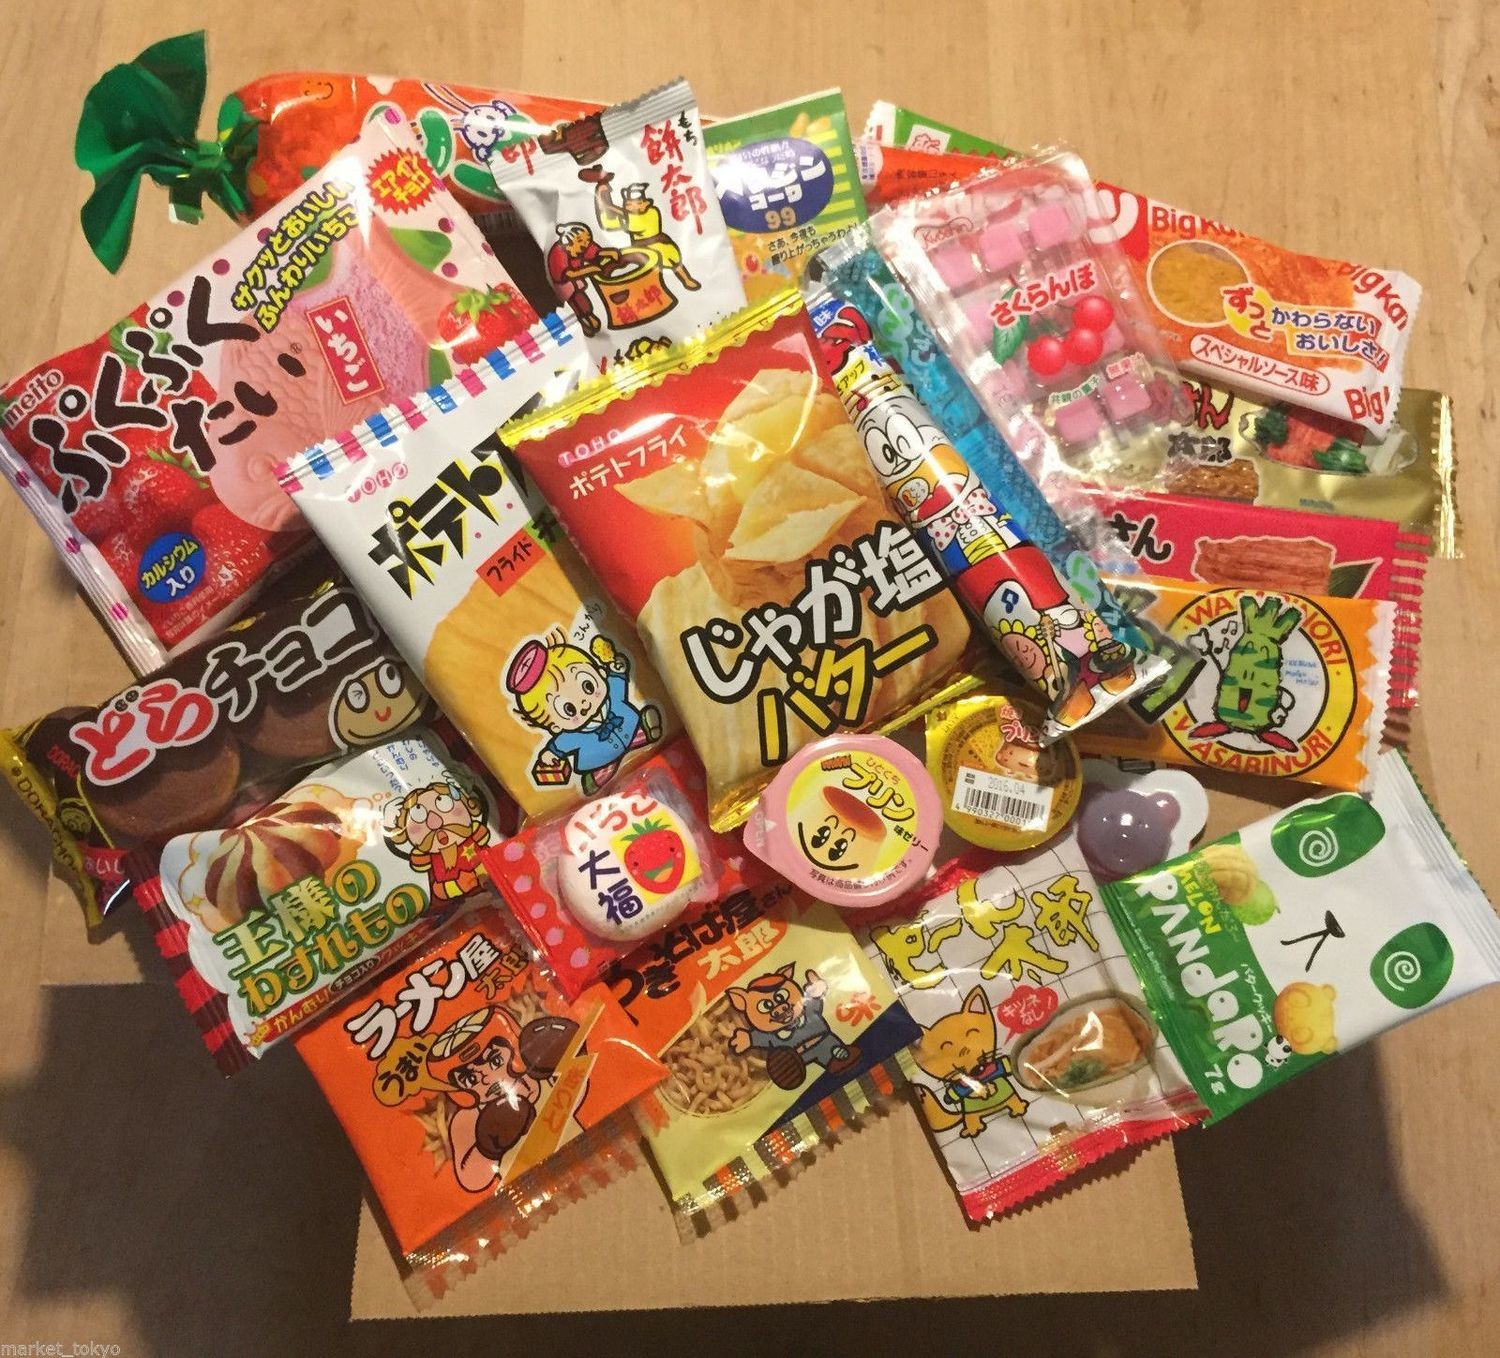  DagashiyaBox Japanese Treats Snacks Assortment Box